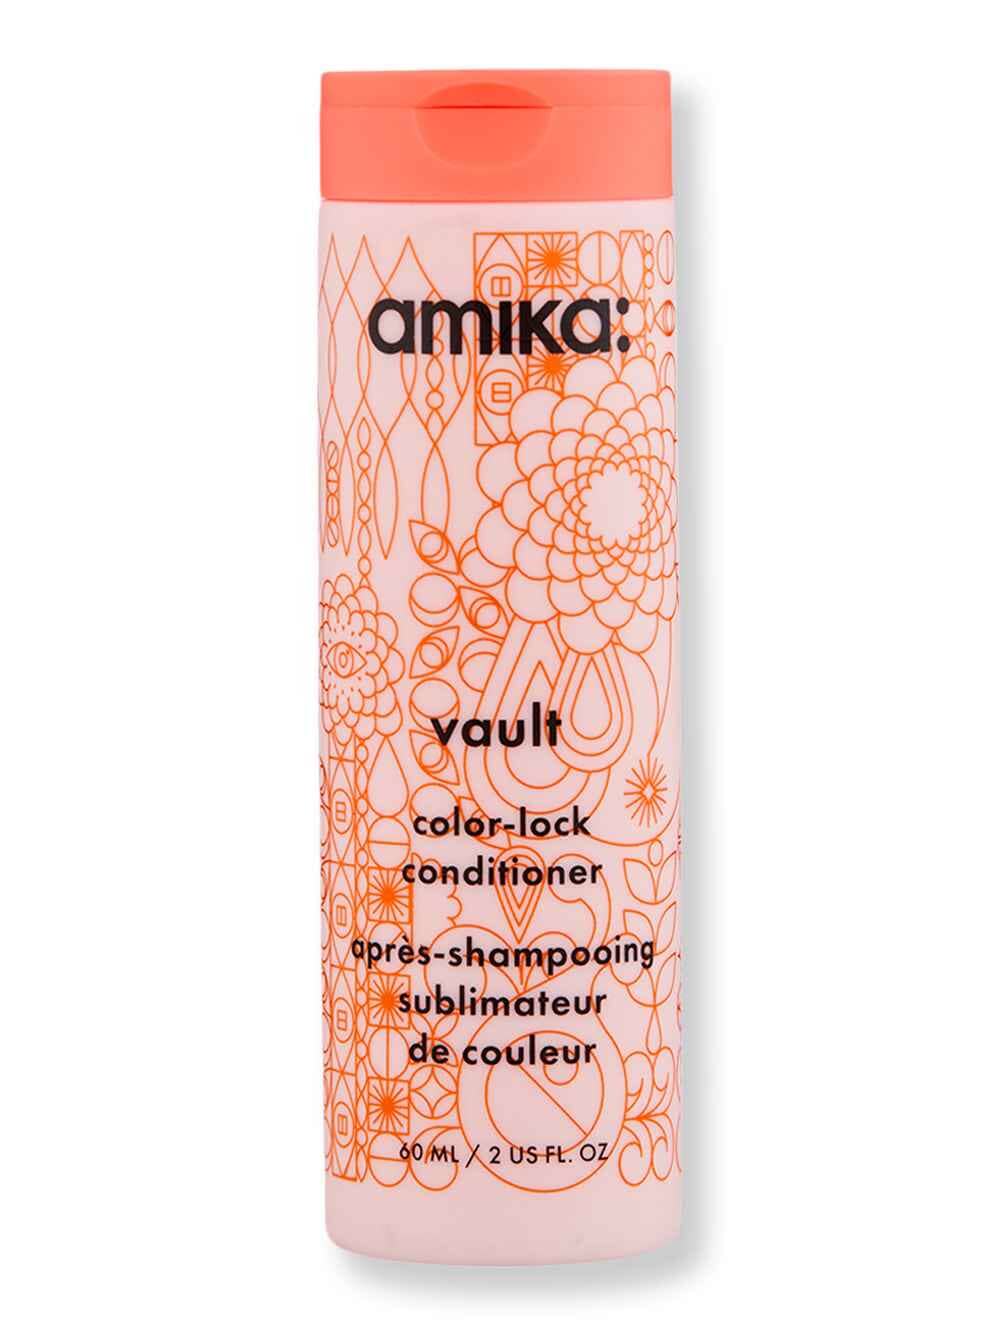 Amika Amika Vault Color-Lock Conditioner 2.03 oz60 ml Conditioners 